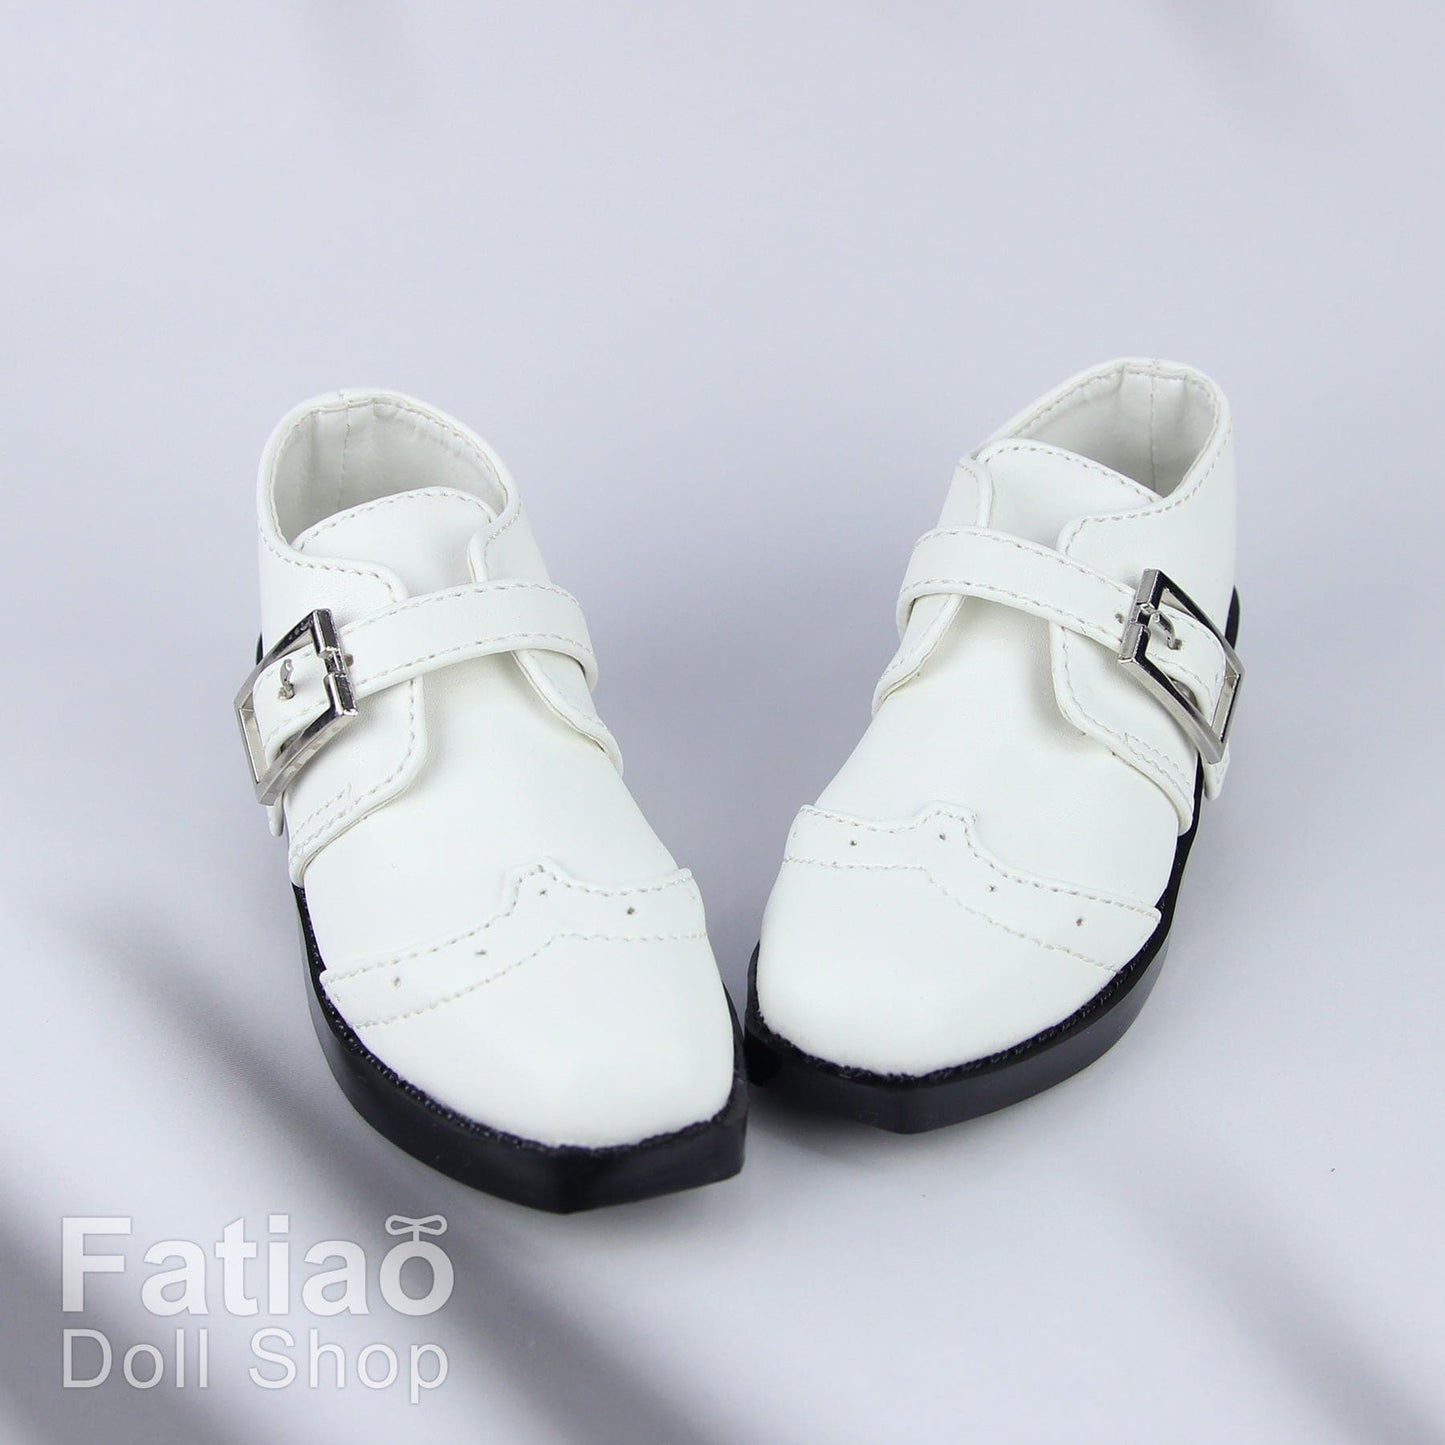 【Fatiao Doll Shop】牛津雕花皮鞋 S39 多色 / BJD SD13BOY SD17 3分